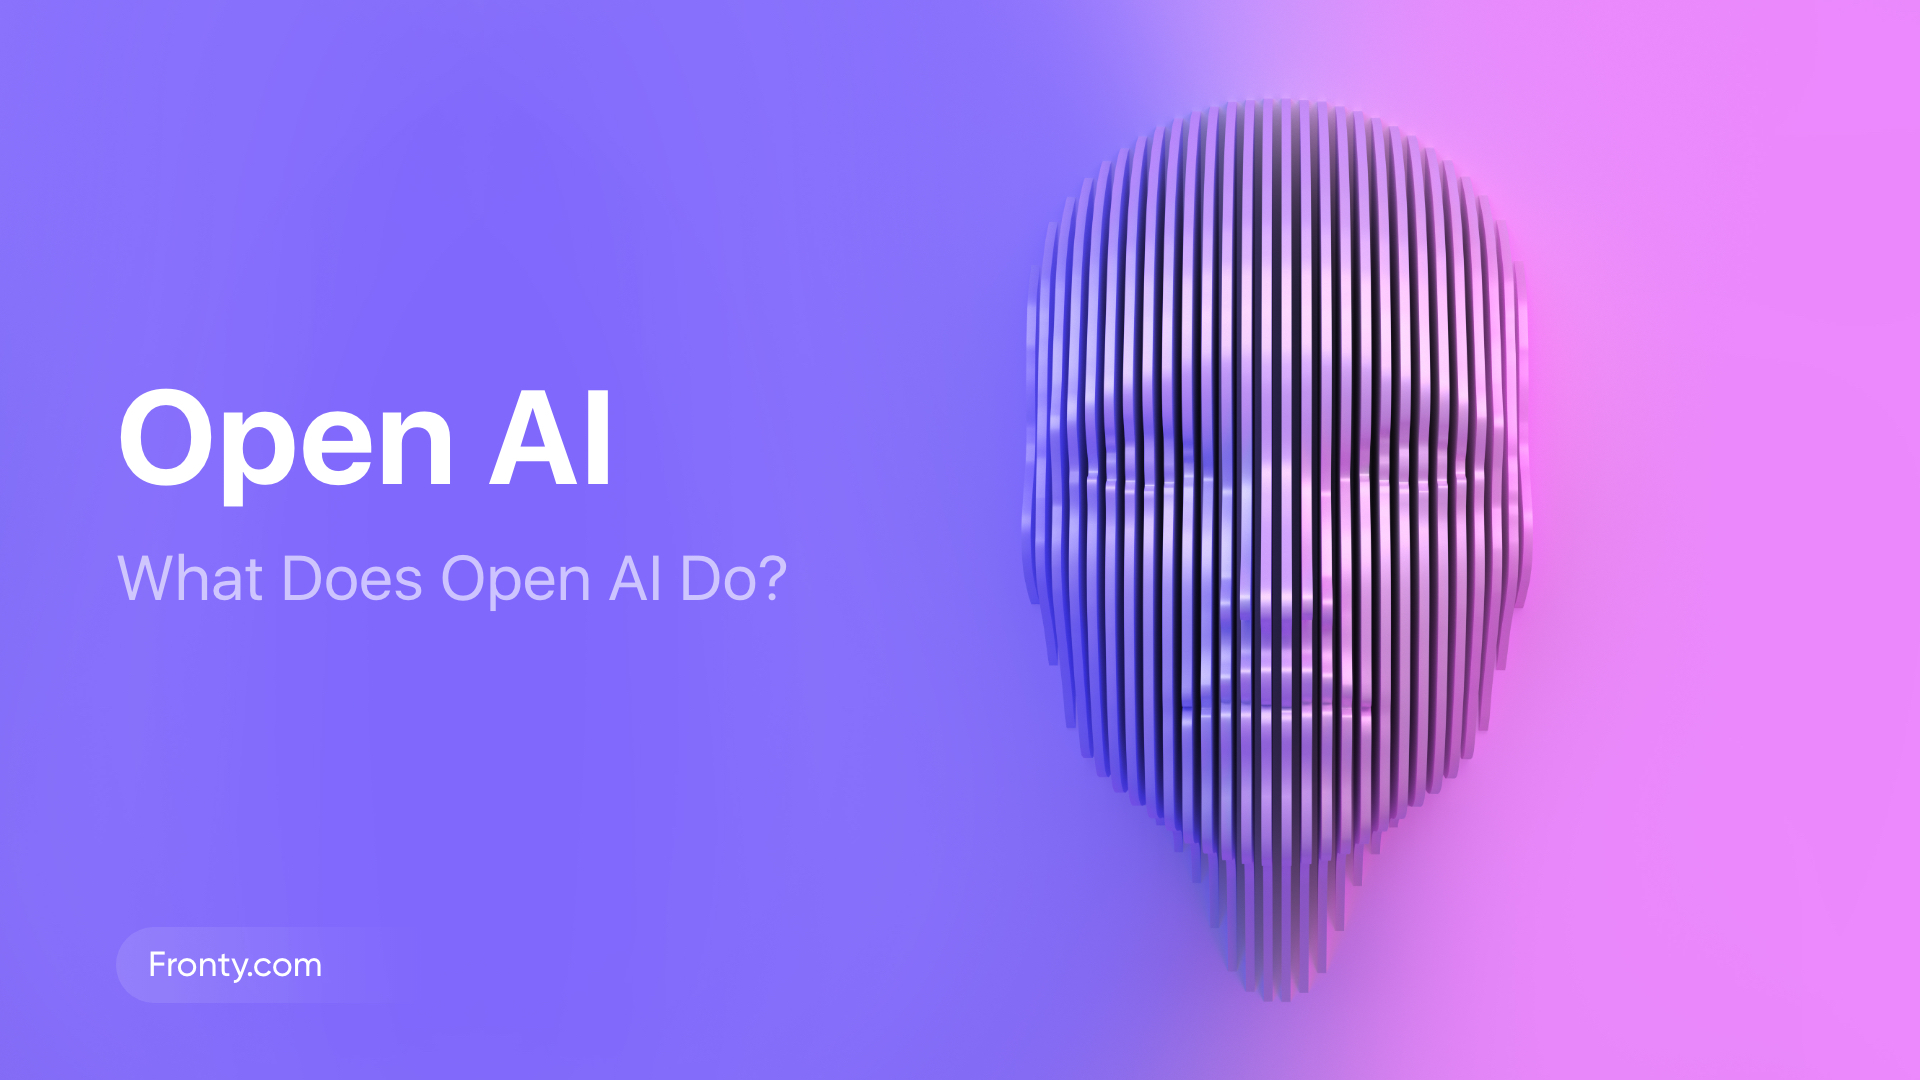 Microsoft & OpenAI Bring AI Models to Developers Worldwide